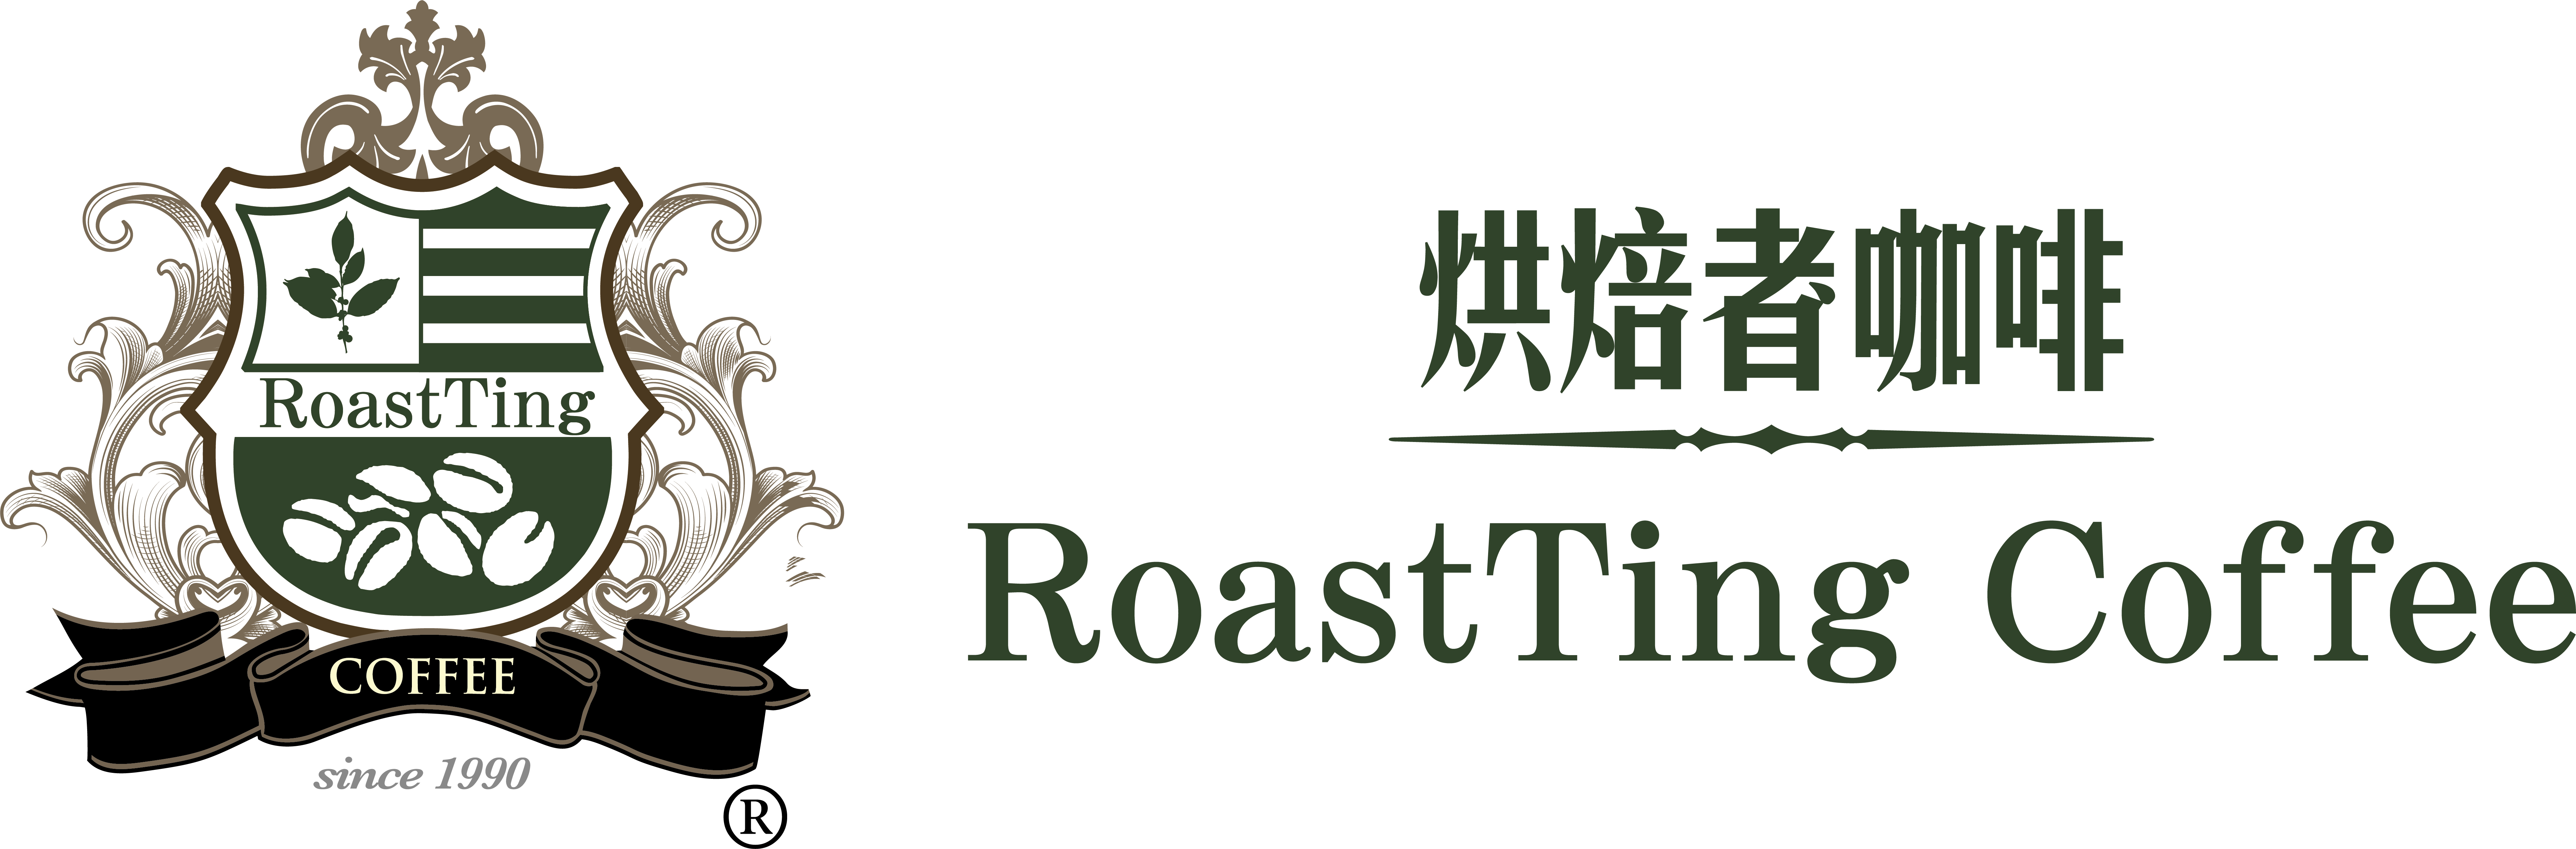 烘焙者咖啡Roastting Coffee